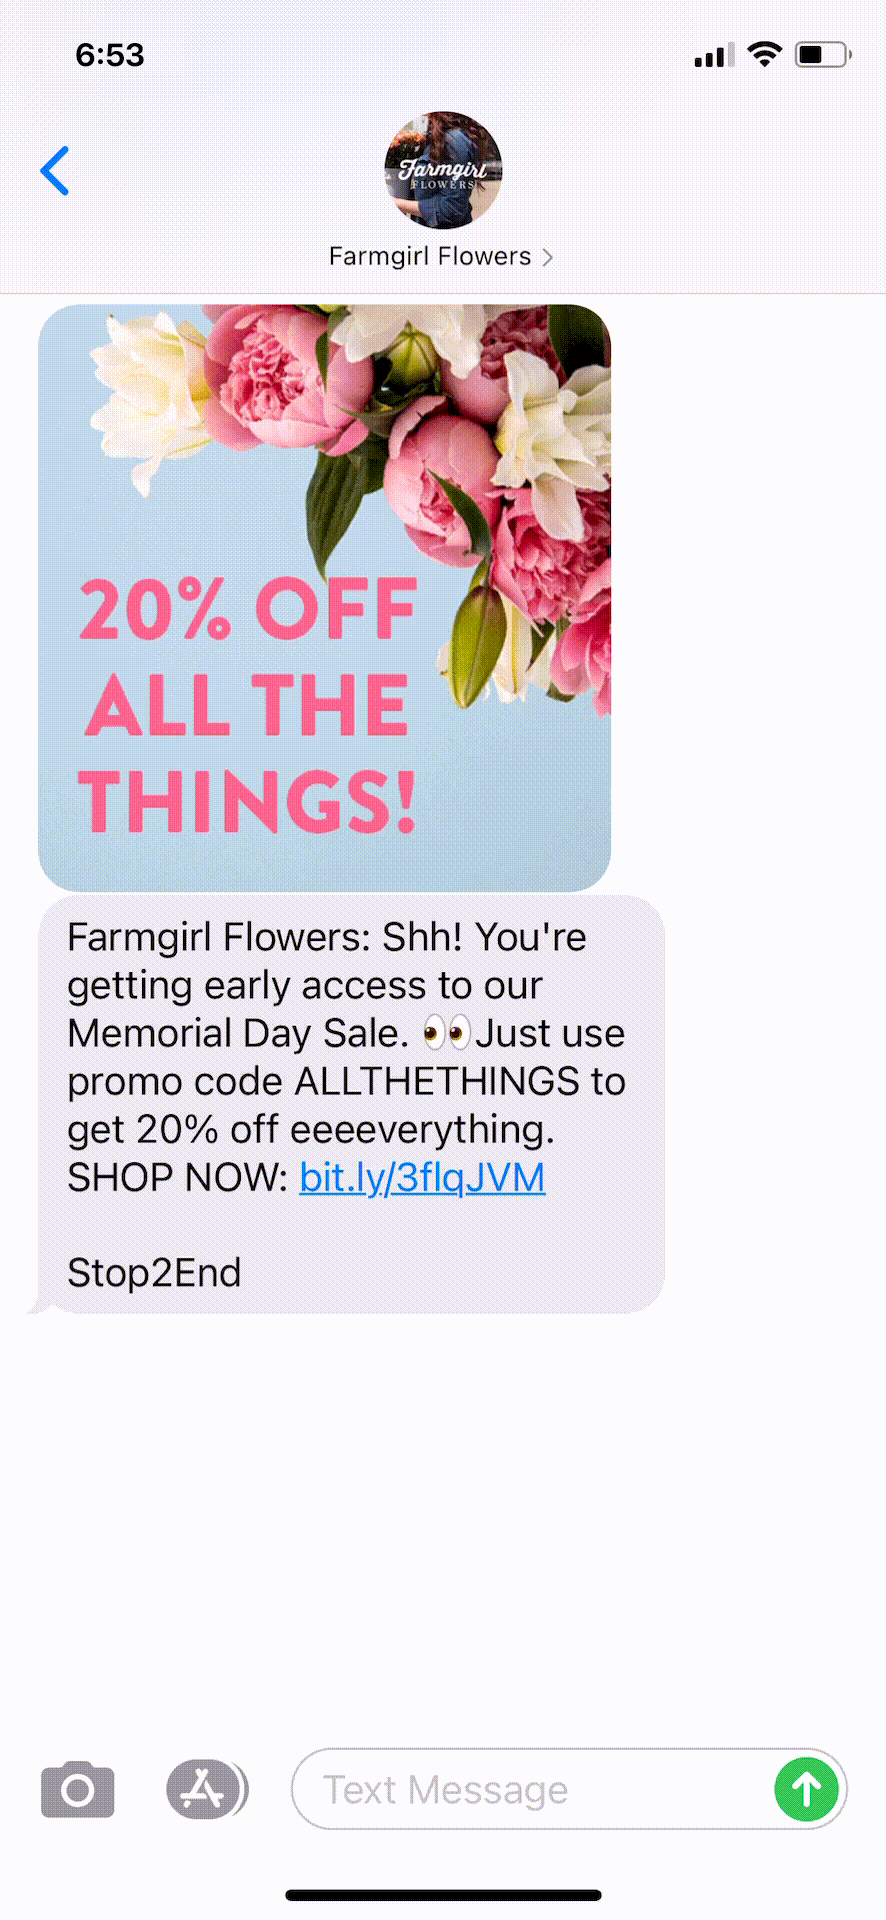 Farmgirl-Flowers-Text-Message-Marketing-Example-05.26.2021